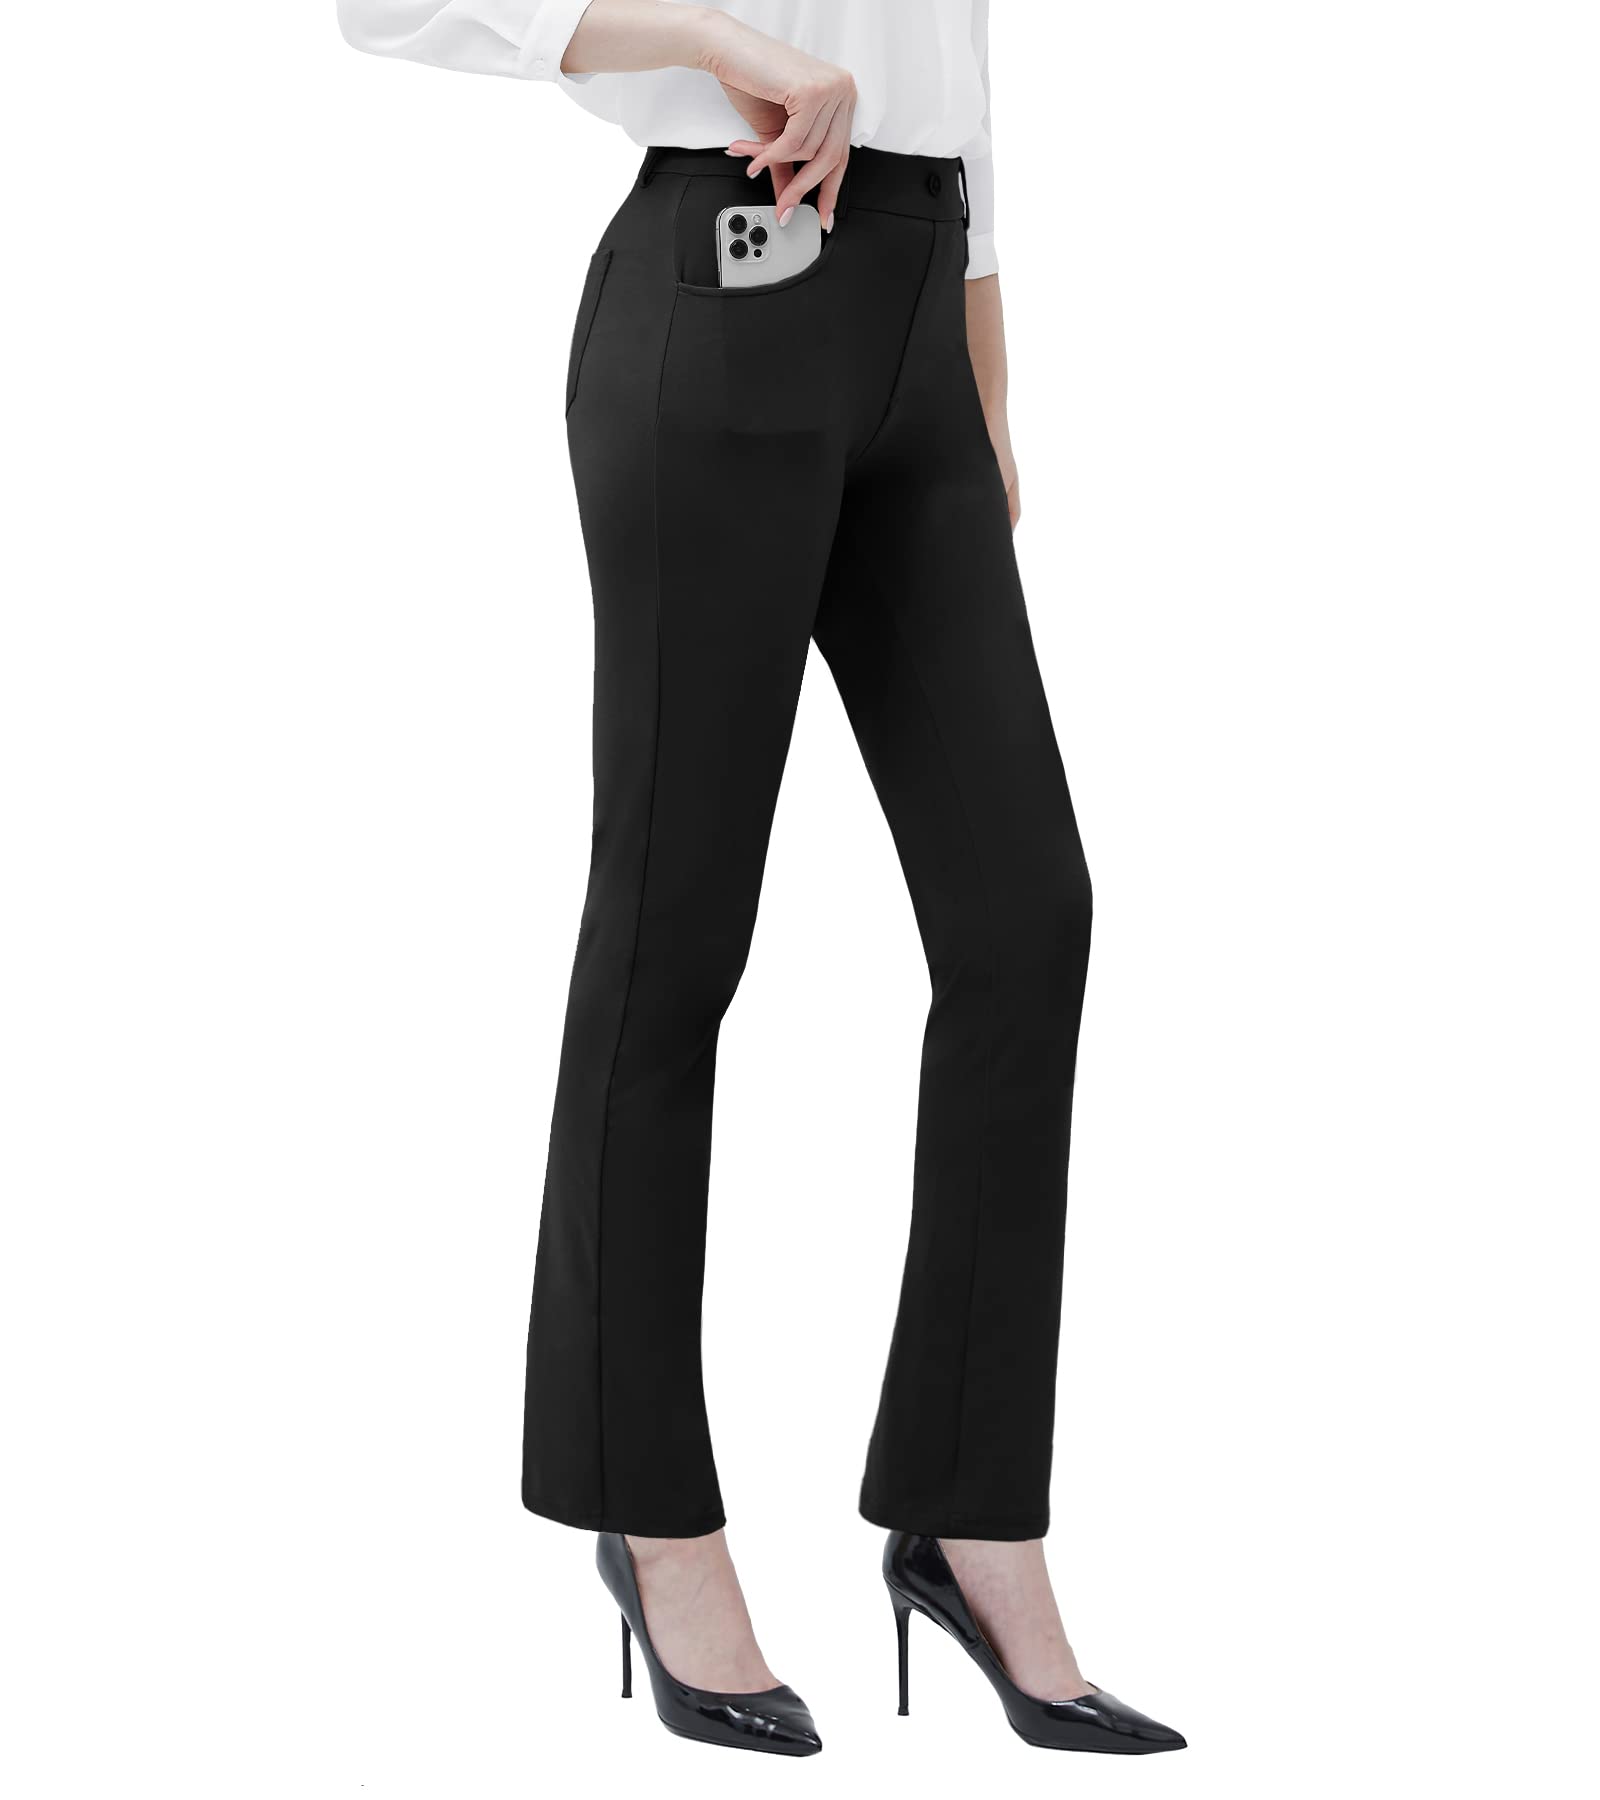 Thapower Women's Yoga Dress Pants Stretch Business Casual Work Slacks  Office Golf Trousers Pants Straight Leg